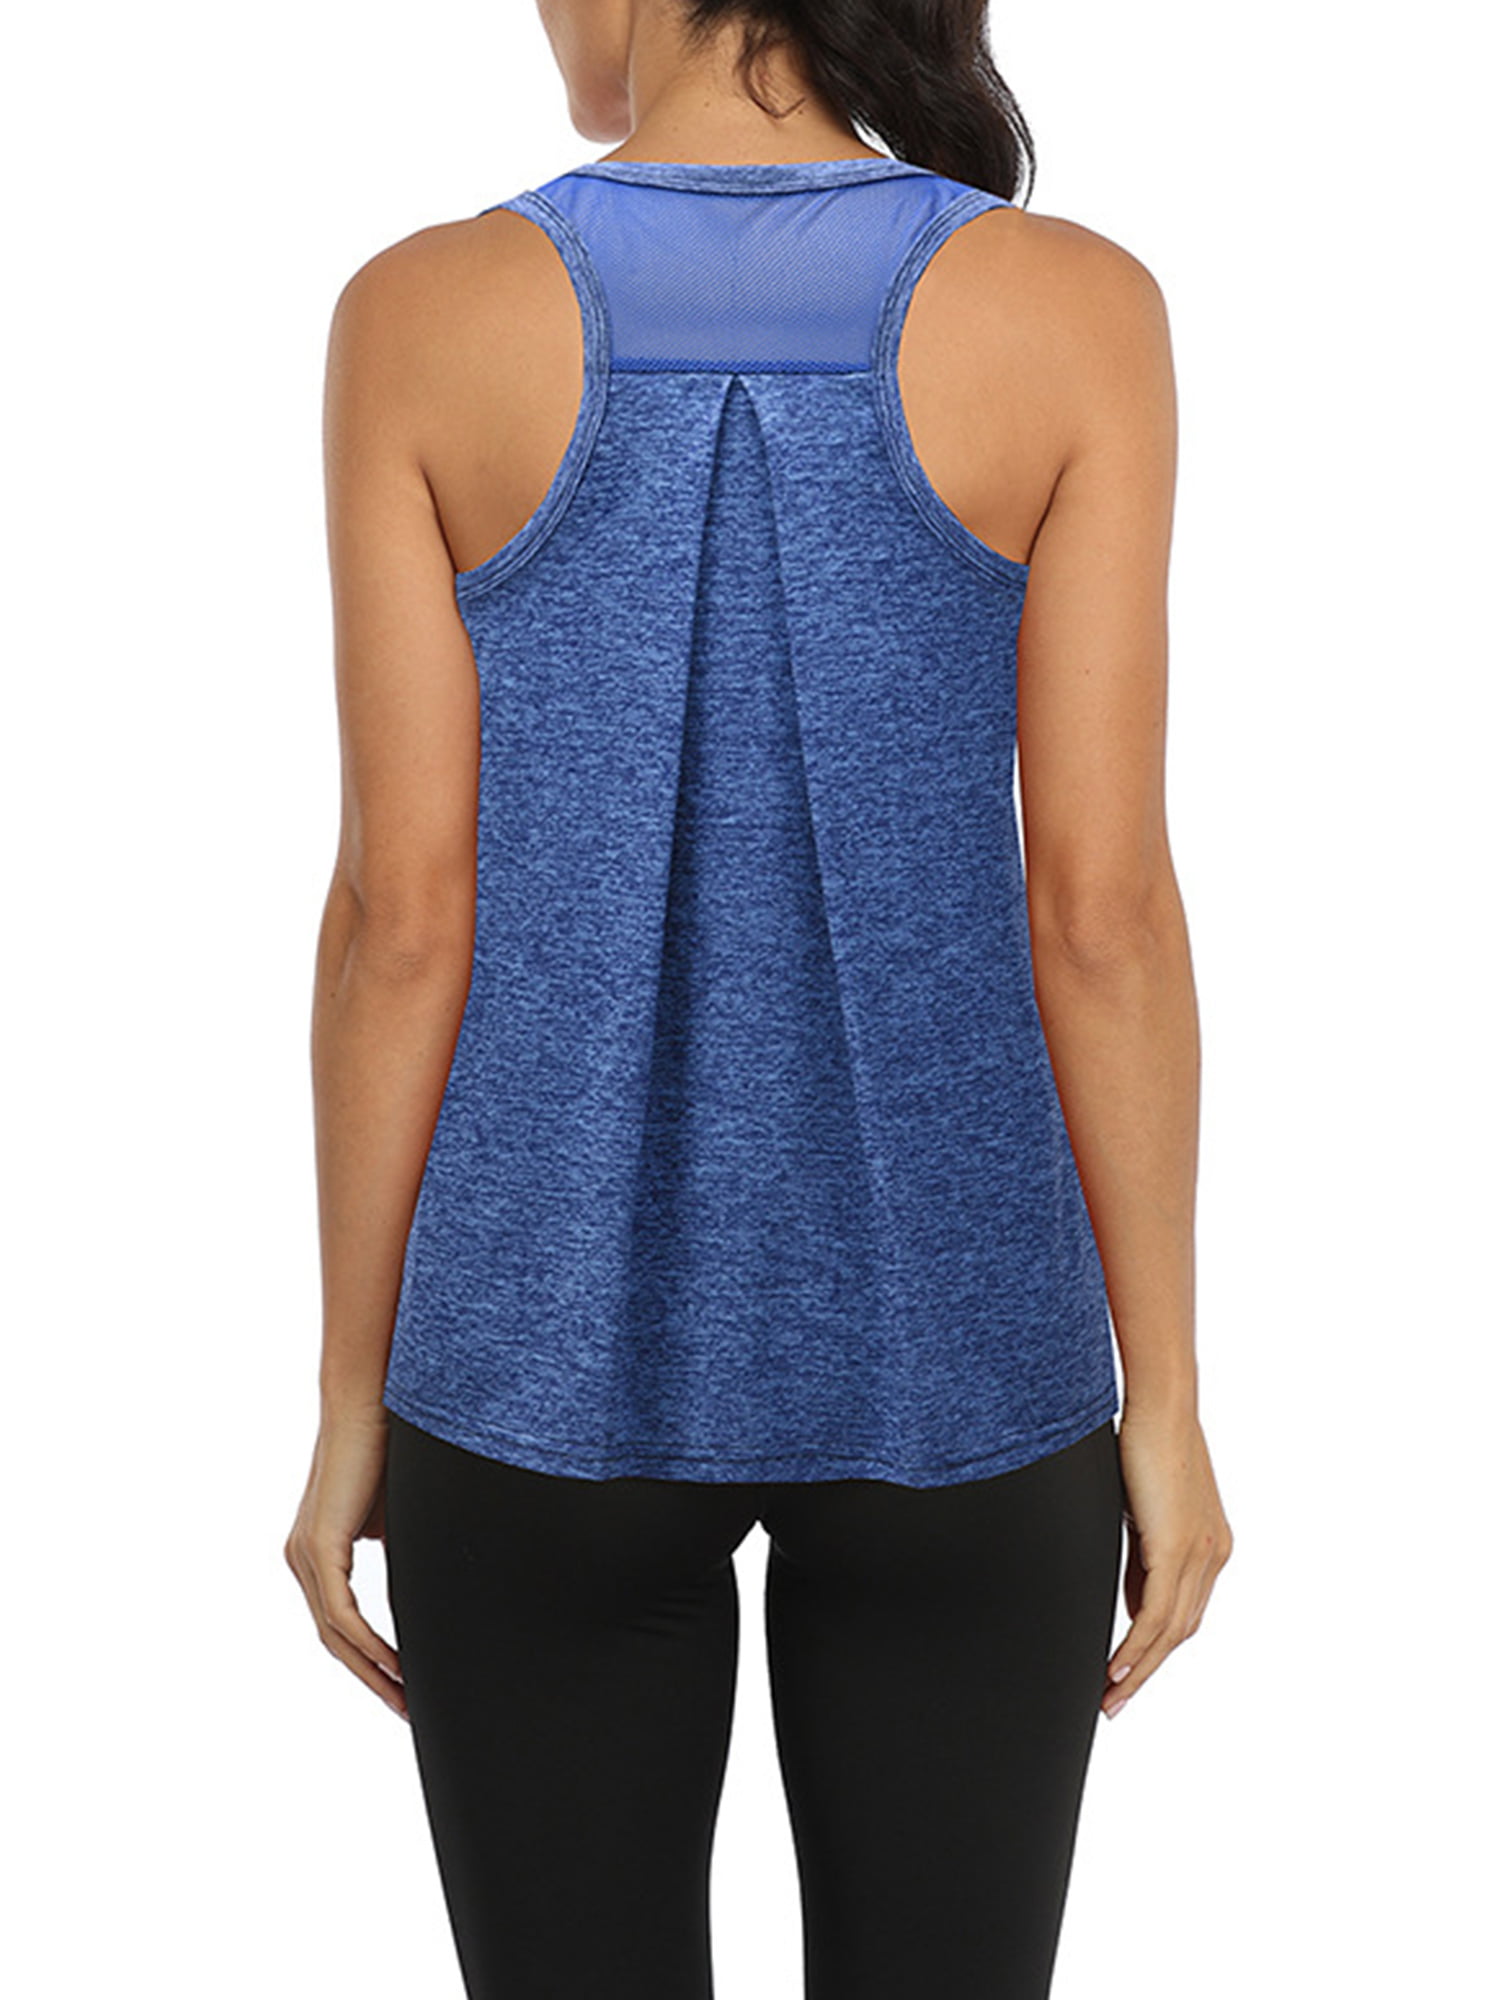 Women's Athletic Mesh Vests Yoga T-back Sleeveless Tank Tops Sports Quick dry